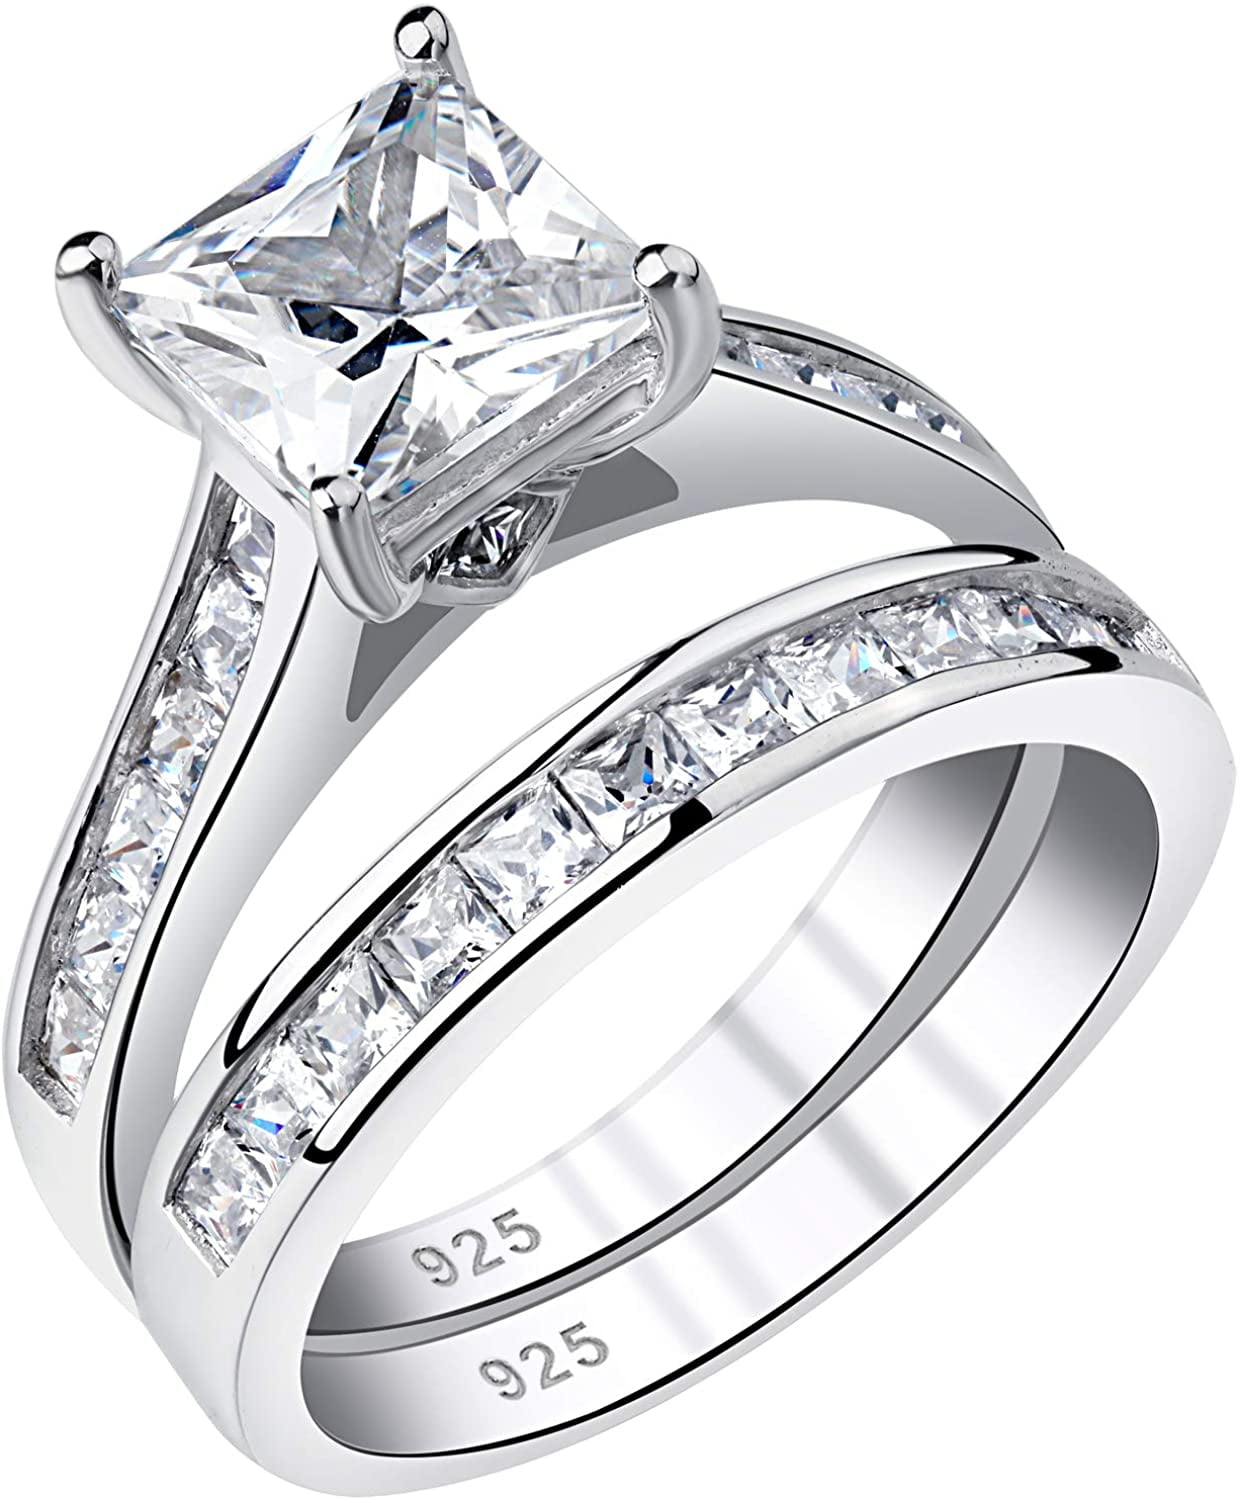 Sterling Silver .925 CZ Halo Princess Cut Engagement Ring Wedding Band Set 5-10 